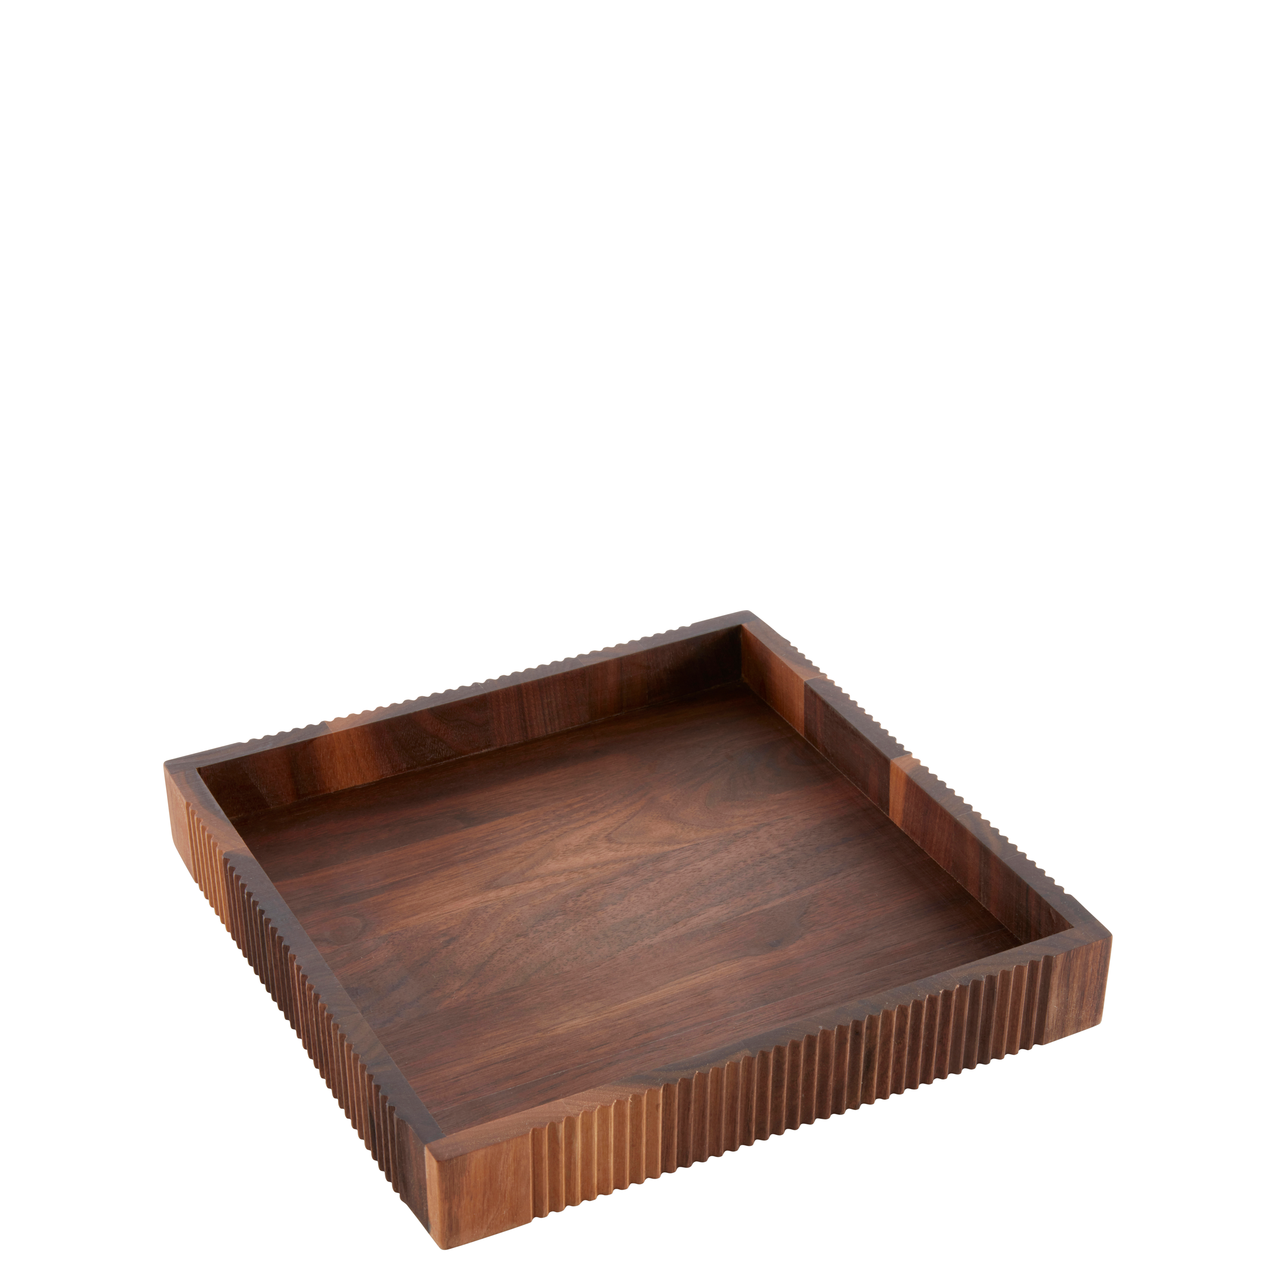 Tray wood (walnut) square 25x25x4cm